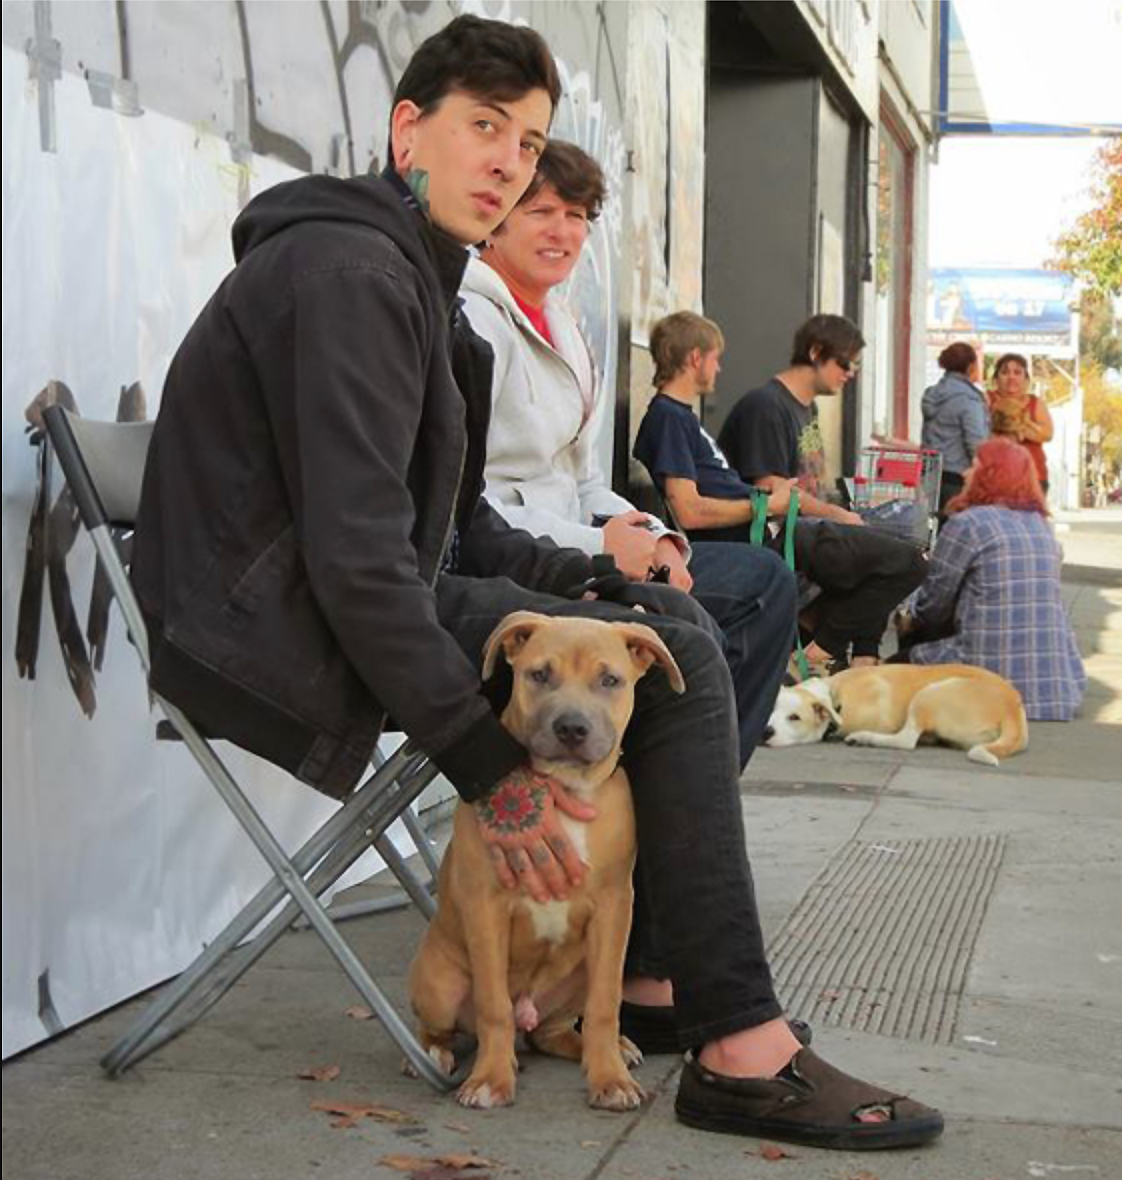 Good Samaritan Support = Safe, healthy dogs